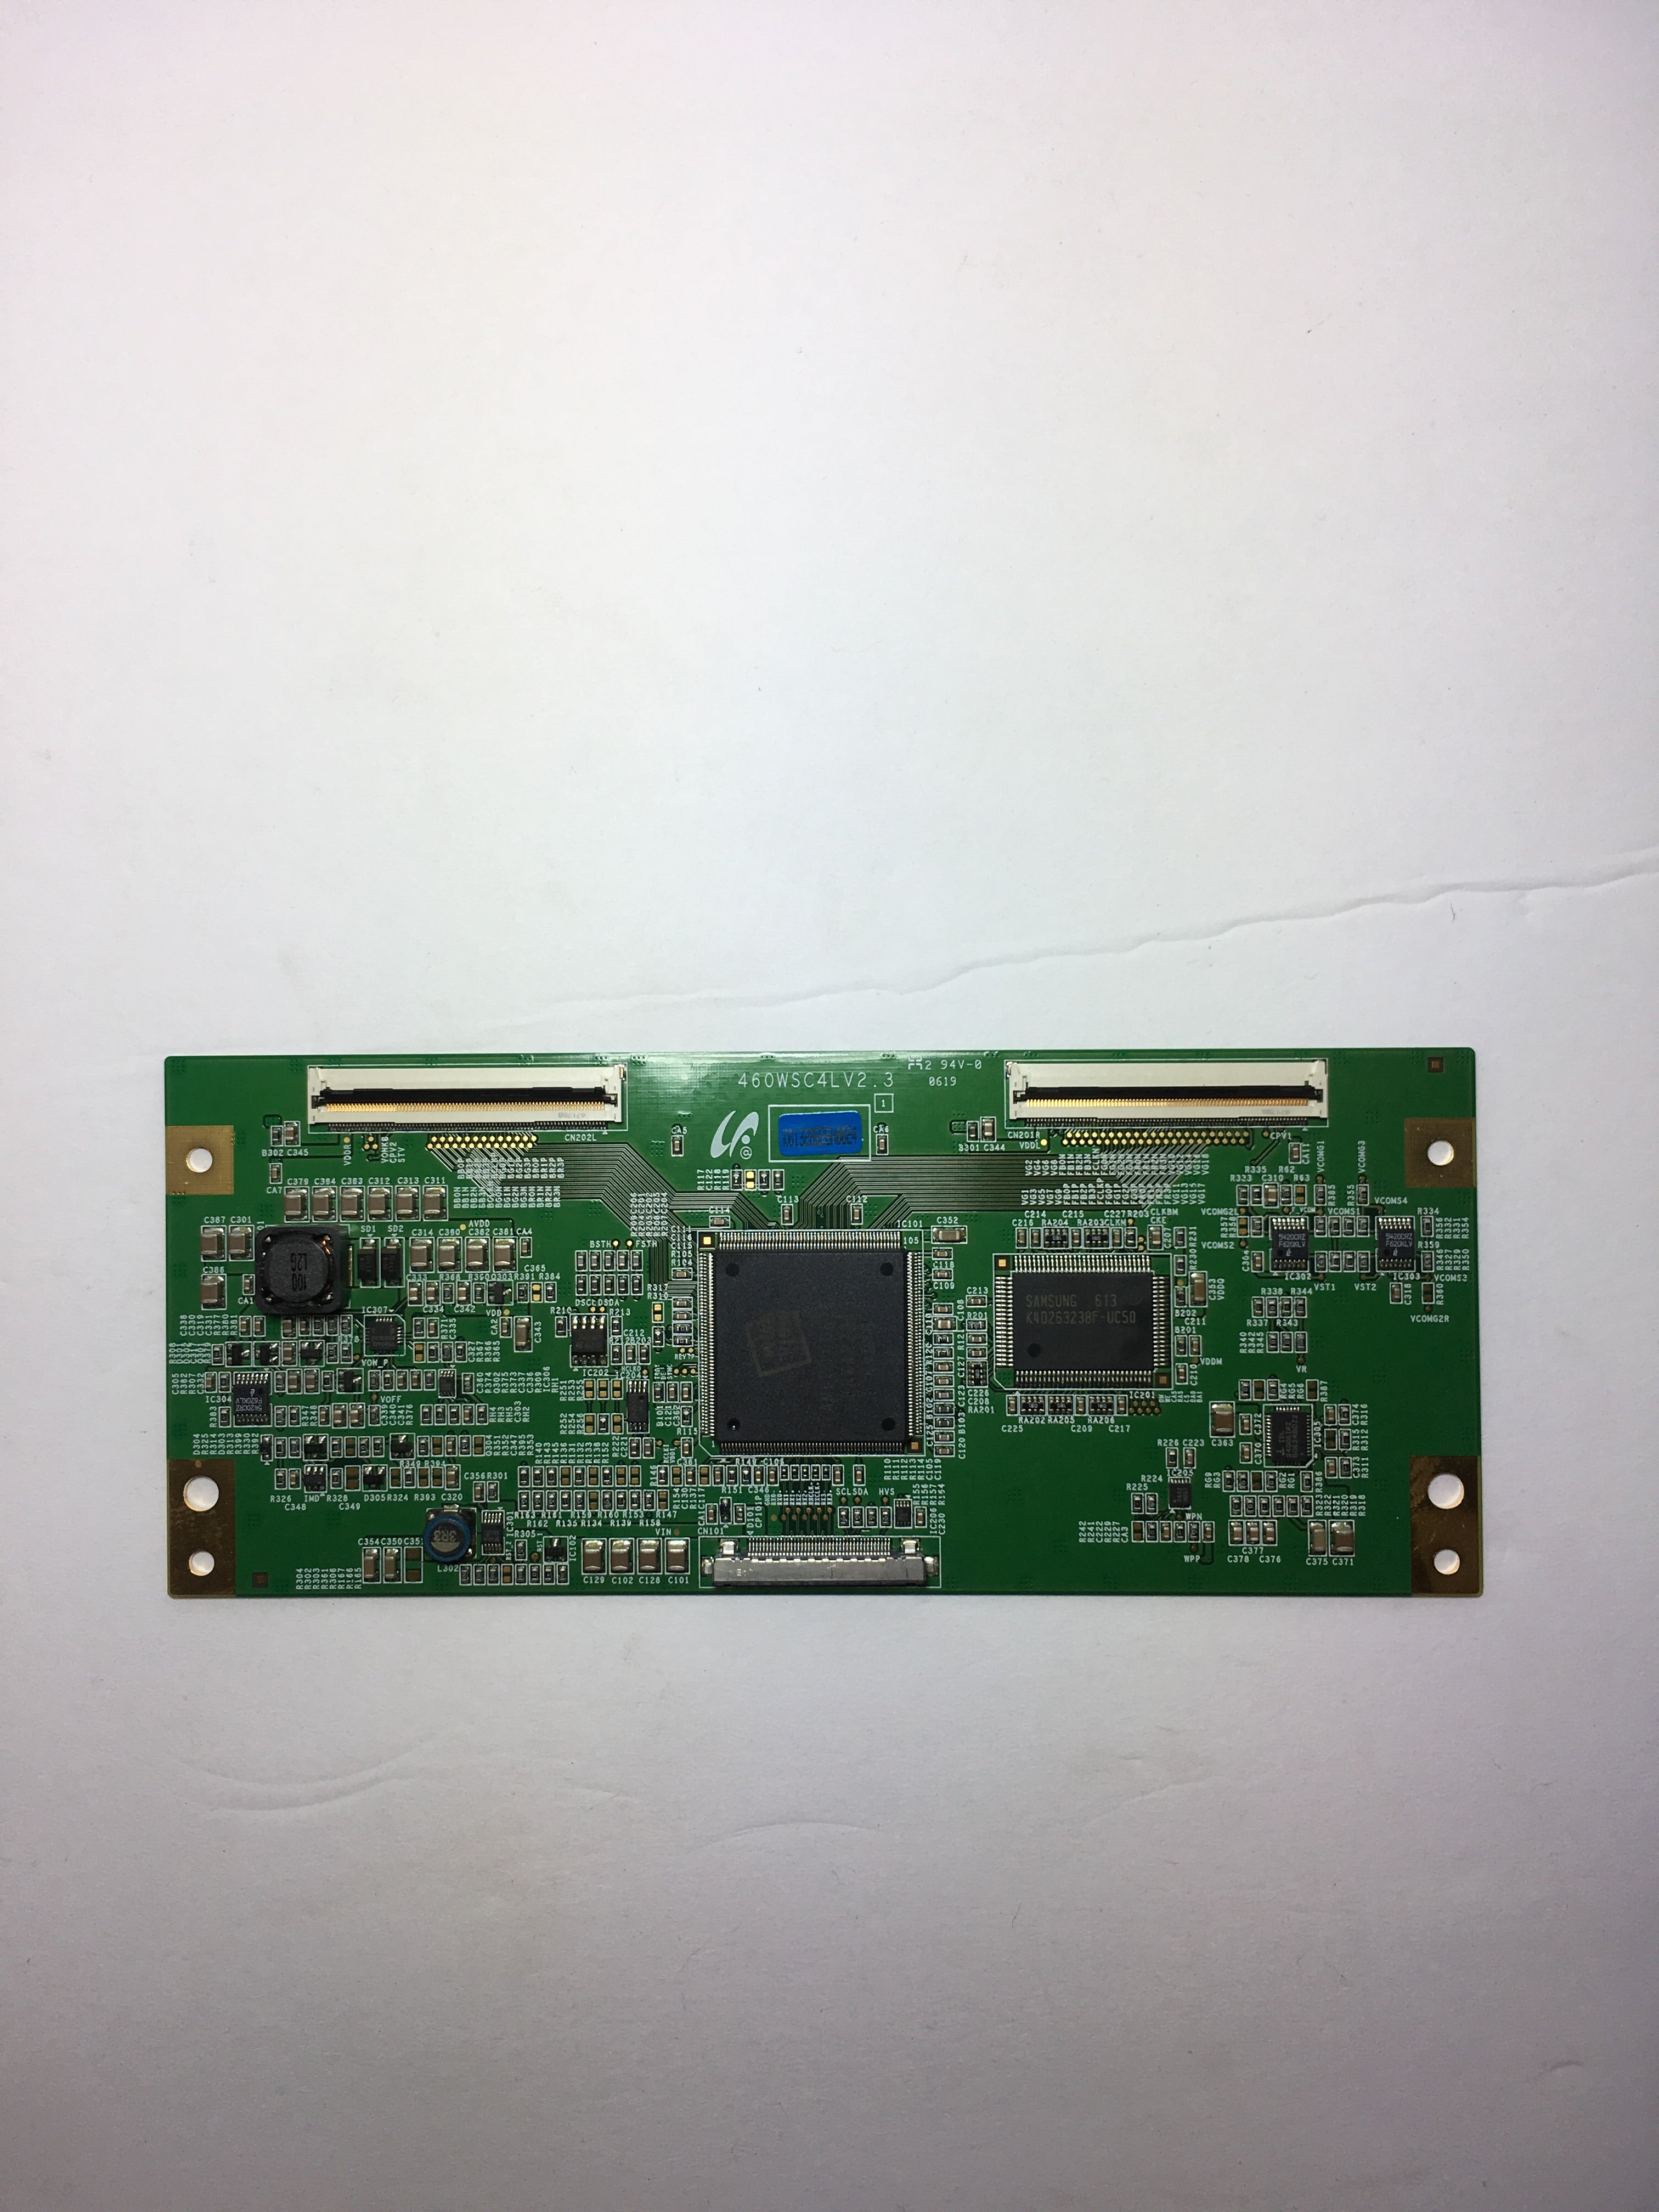 Sony 1-789-619-11 (460WSC4LV2.3) T-Con Board